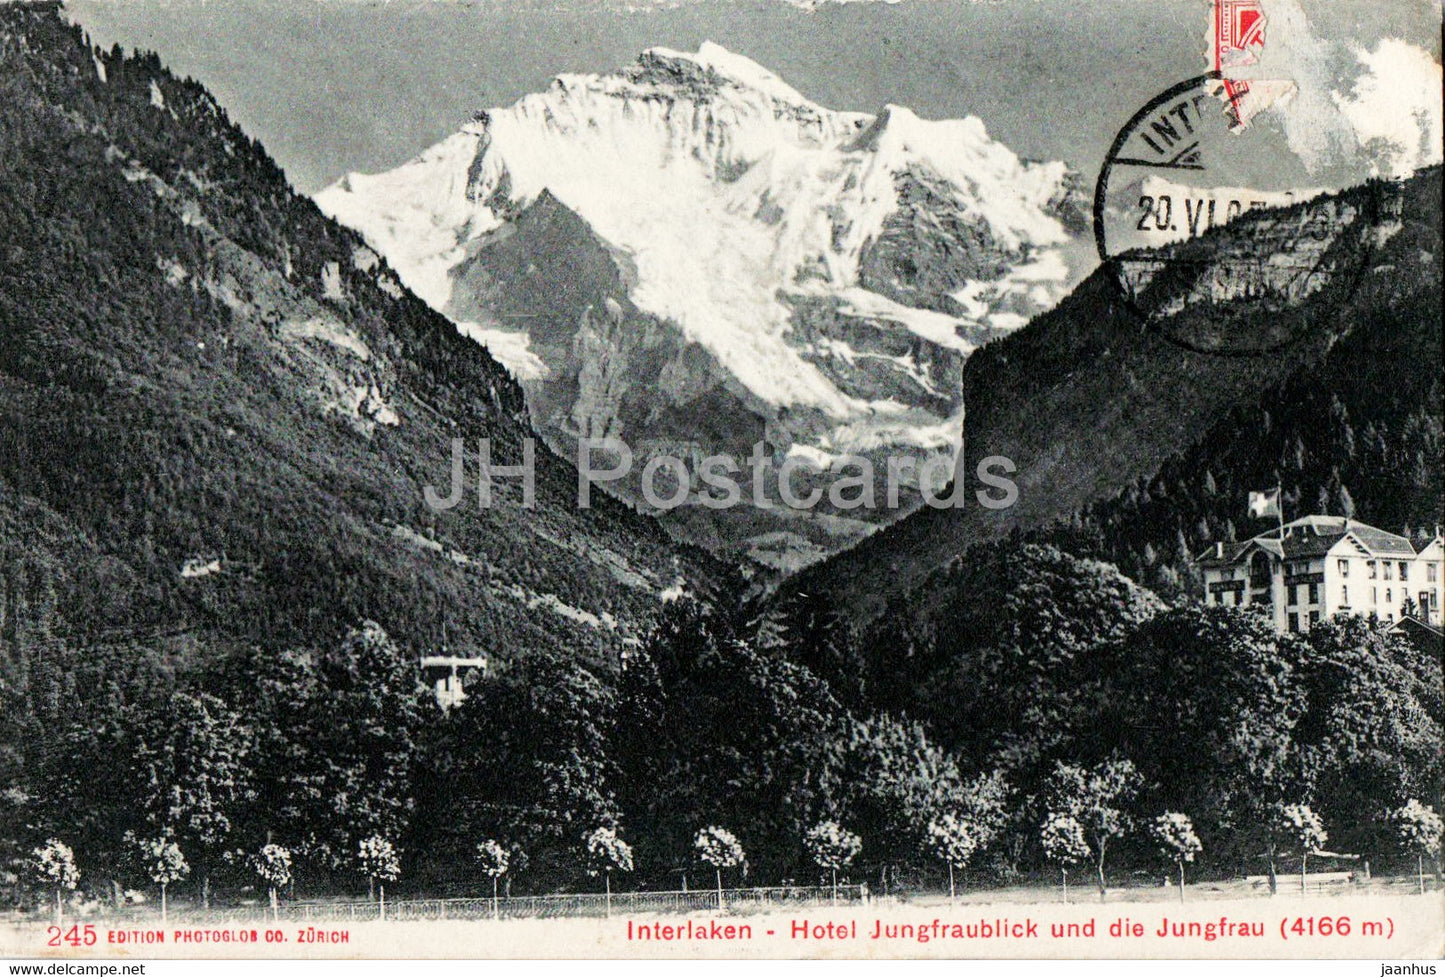 Interlaken - Hotel Jungfraublick und die Jungfrau 4166 m - 245 - old postcard - 1907 - Switzerland - used - JH Postcards